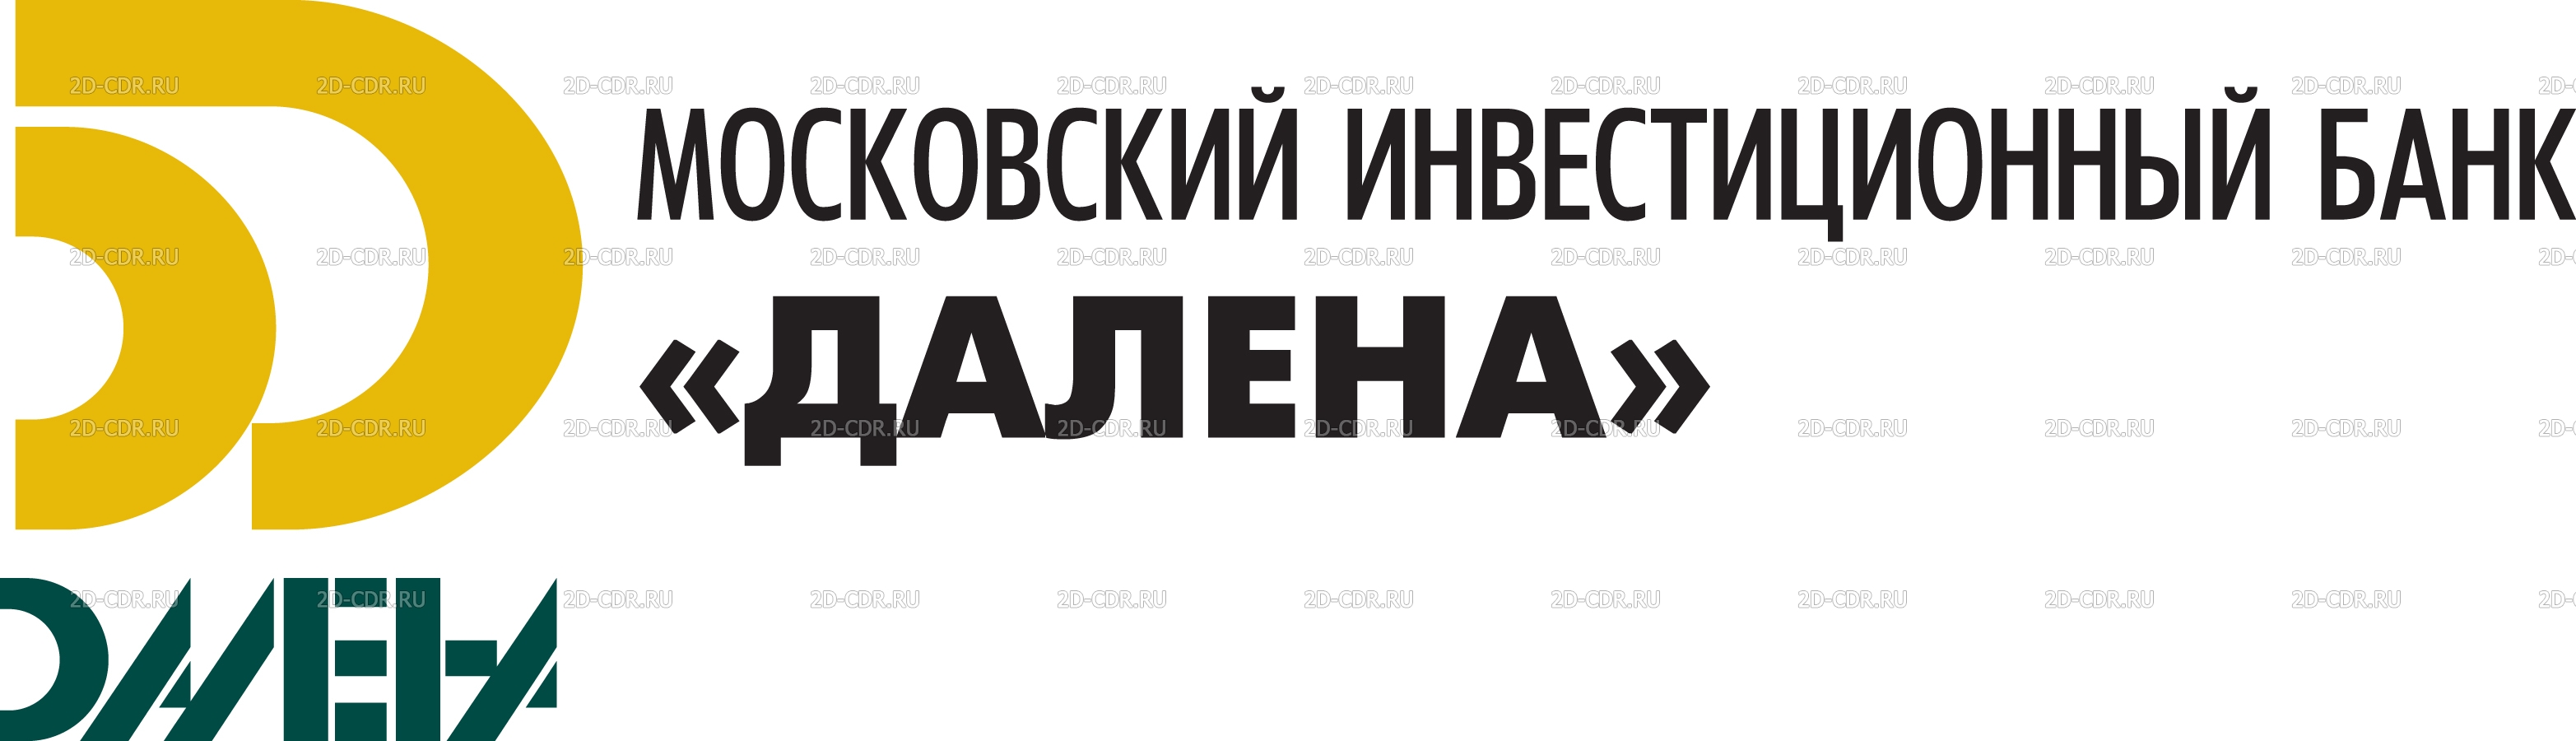 Далена банк. Далена банк лого. Московский банк логотип. Банк Империал логотип. Далена банк сайт